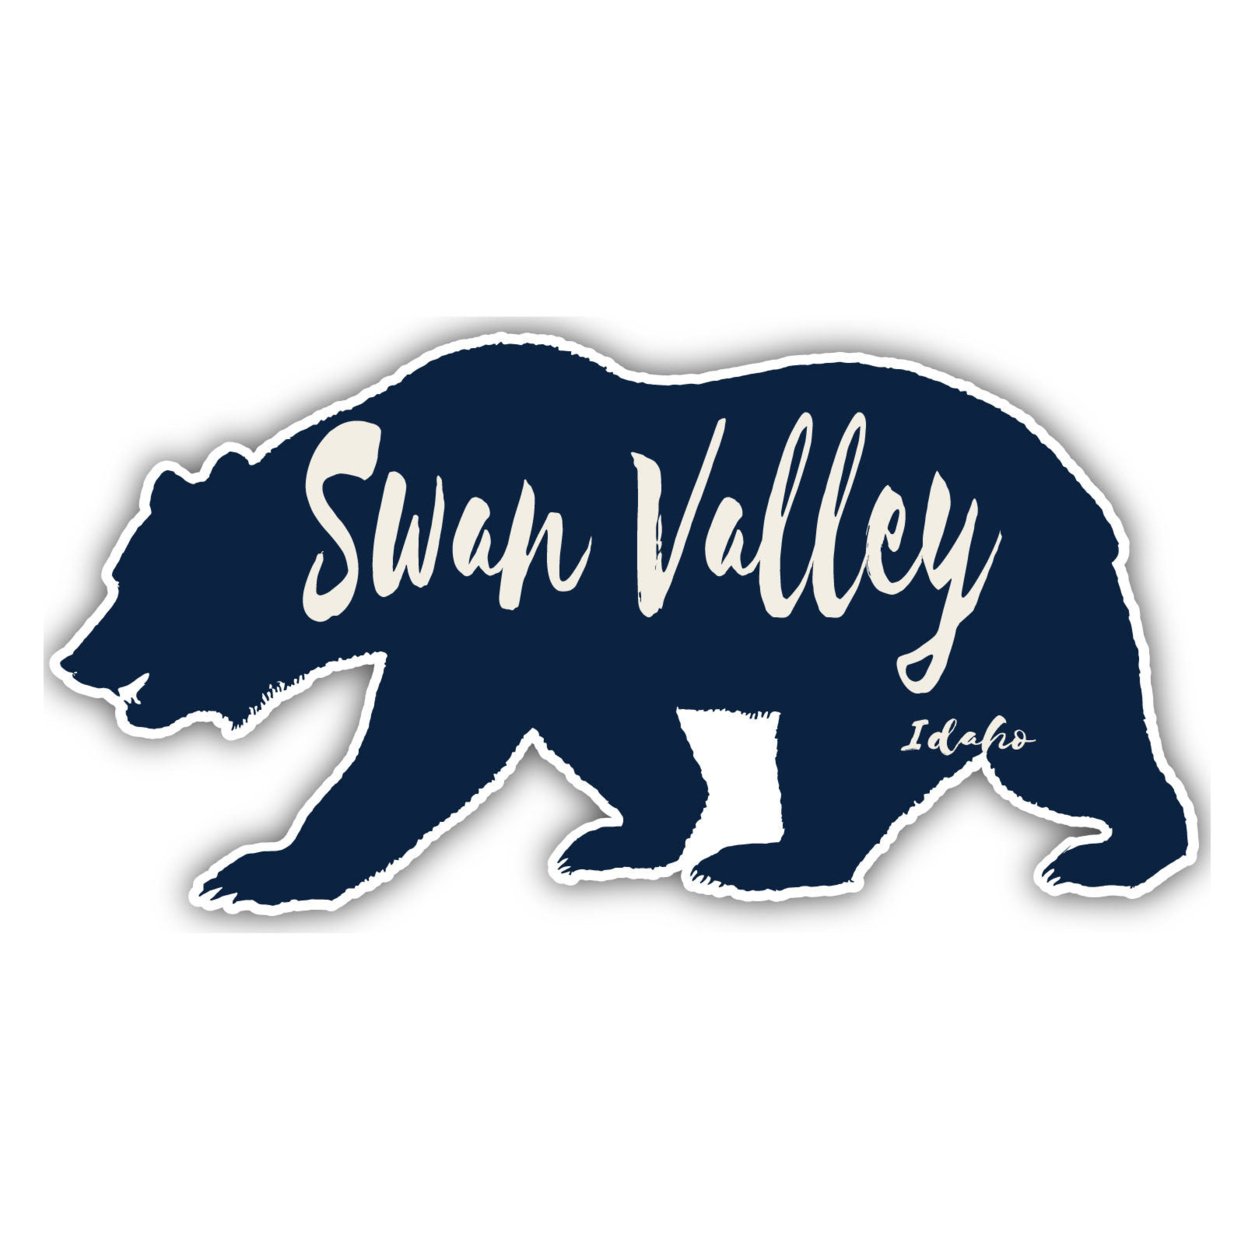 Swan Valley Idaho Souvenir Decorative Stickers (Choose Theme And Size) - Single Unit, 4-Inch, Bear